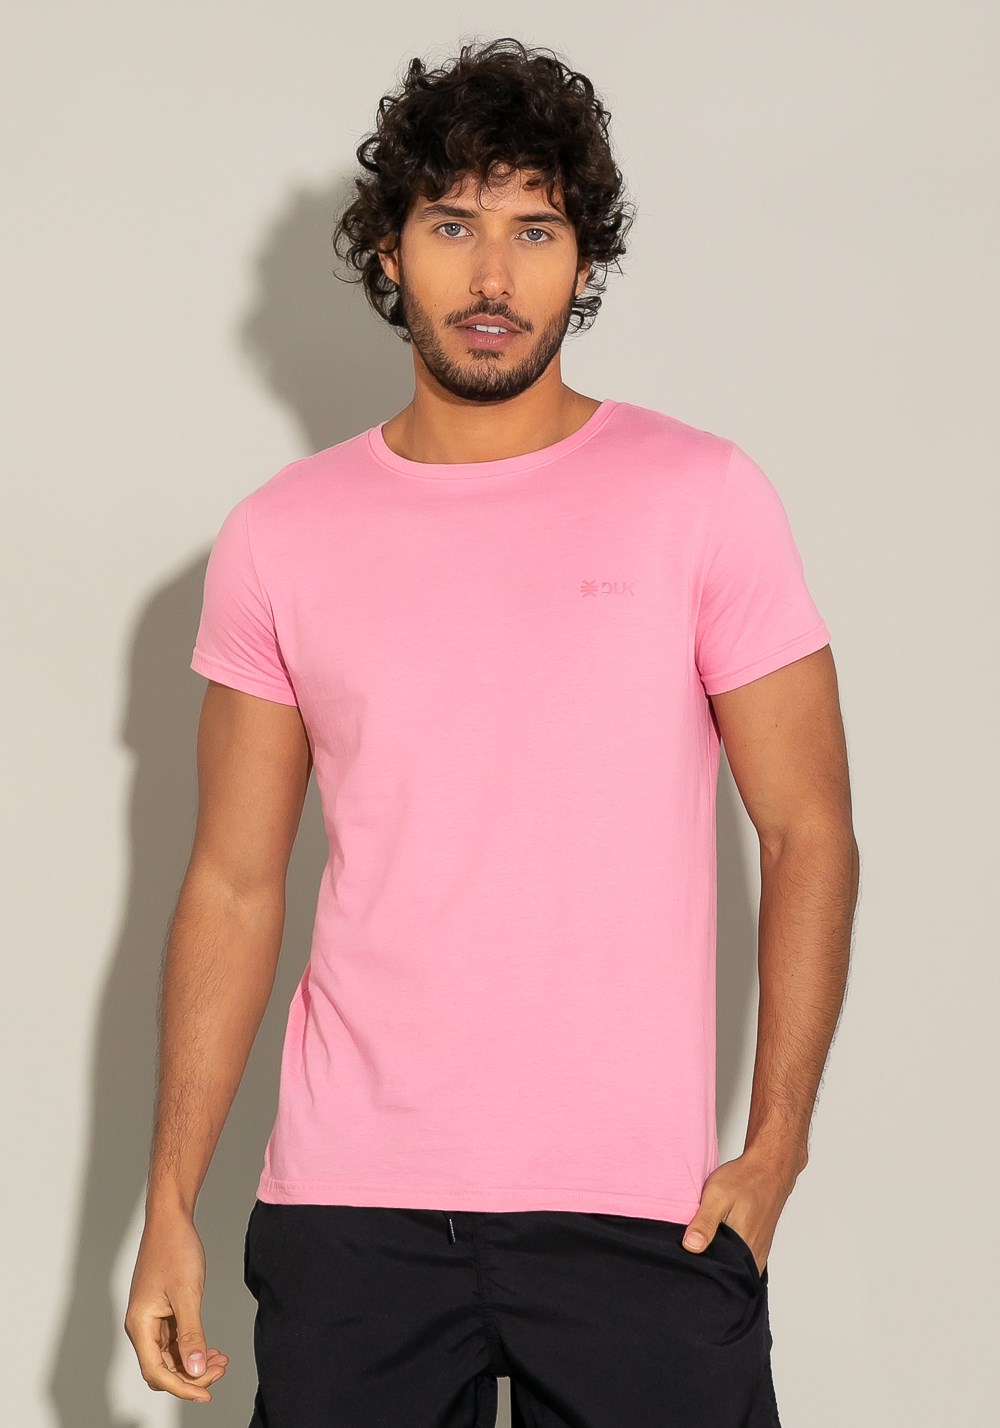 Camiseta algodão manga curta for men super slim rosa claro